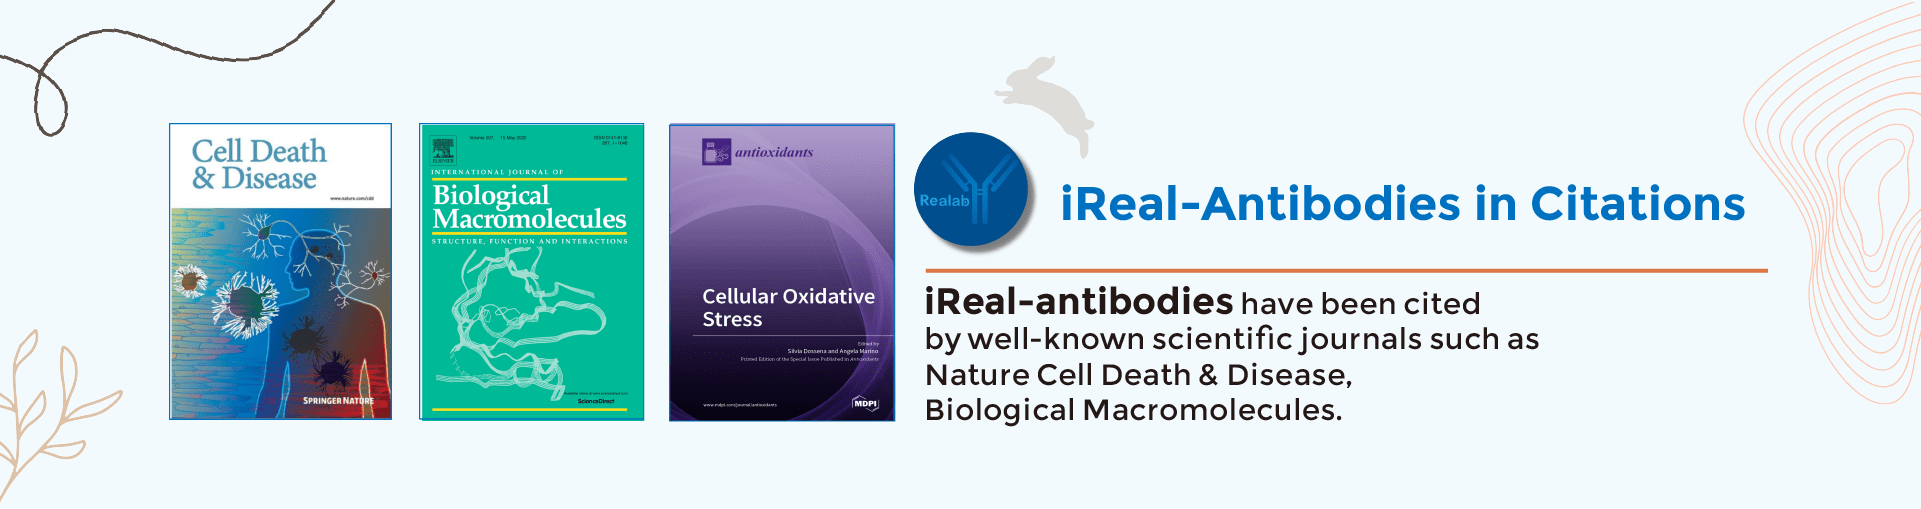 iReal-Antibodies in Citations